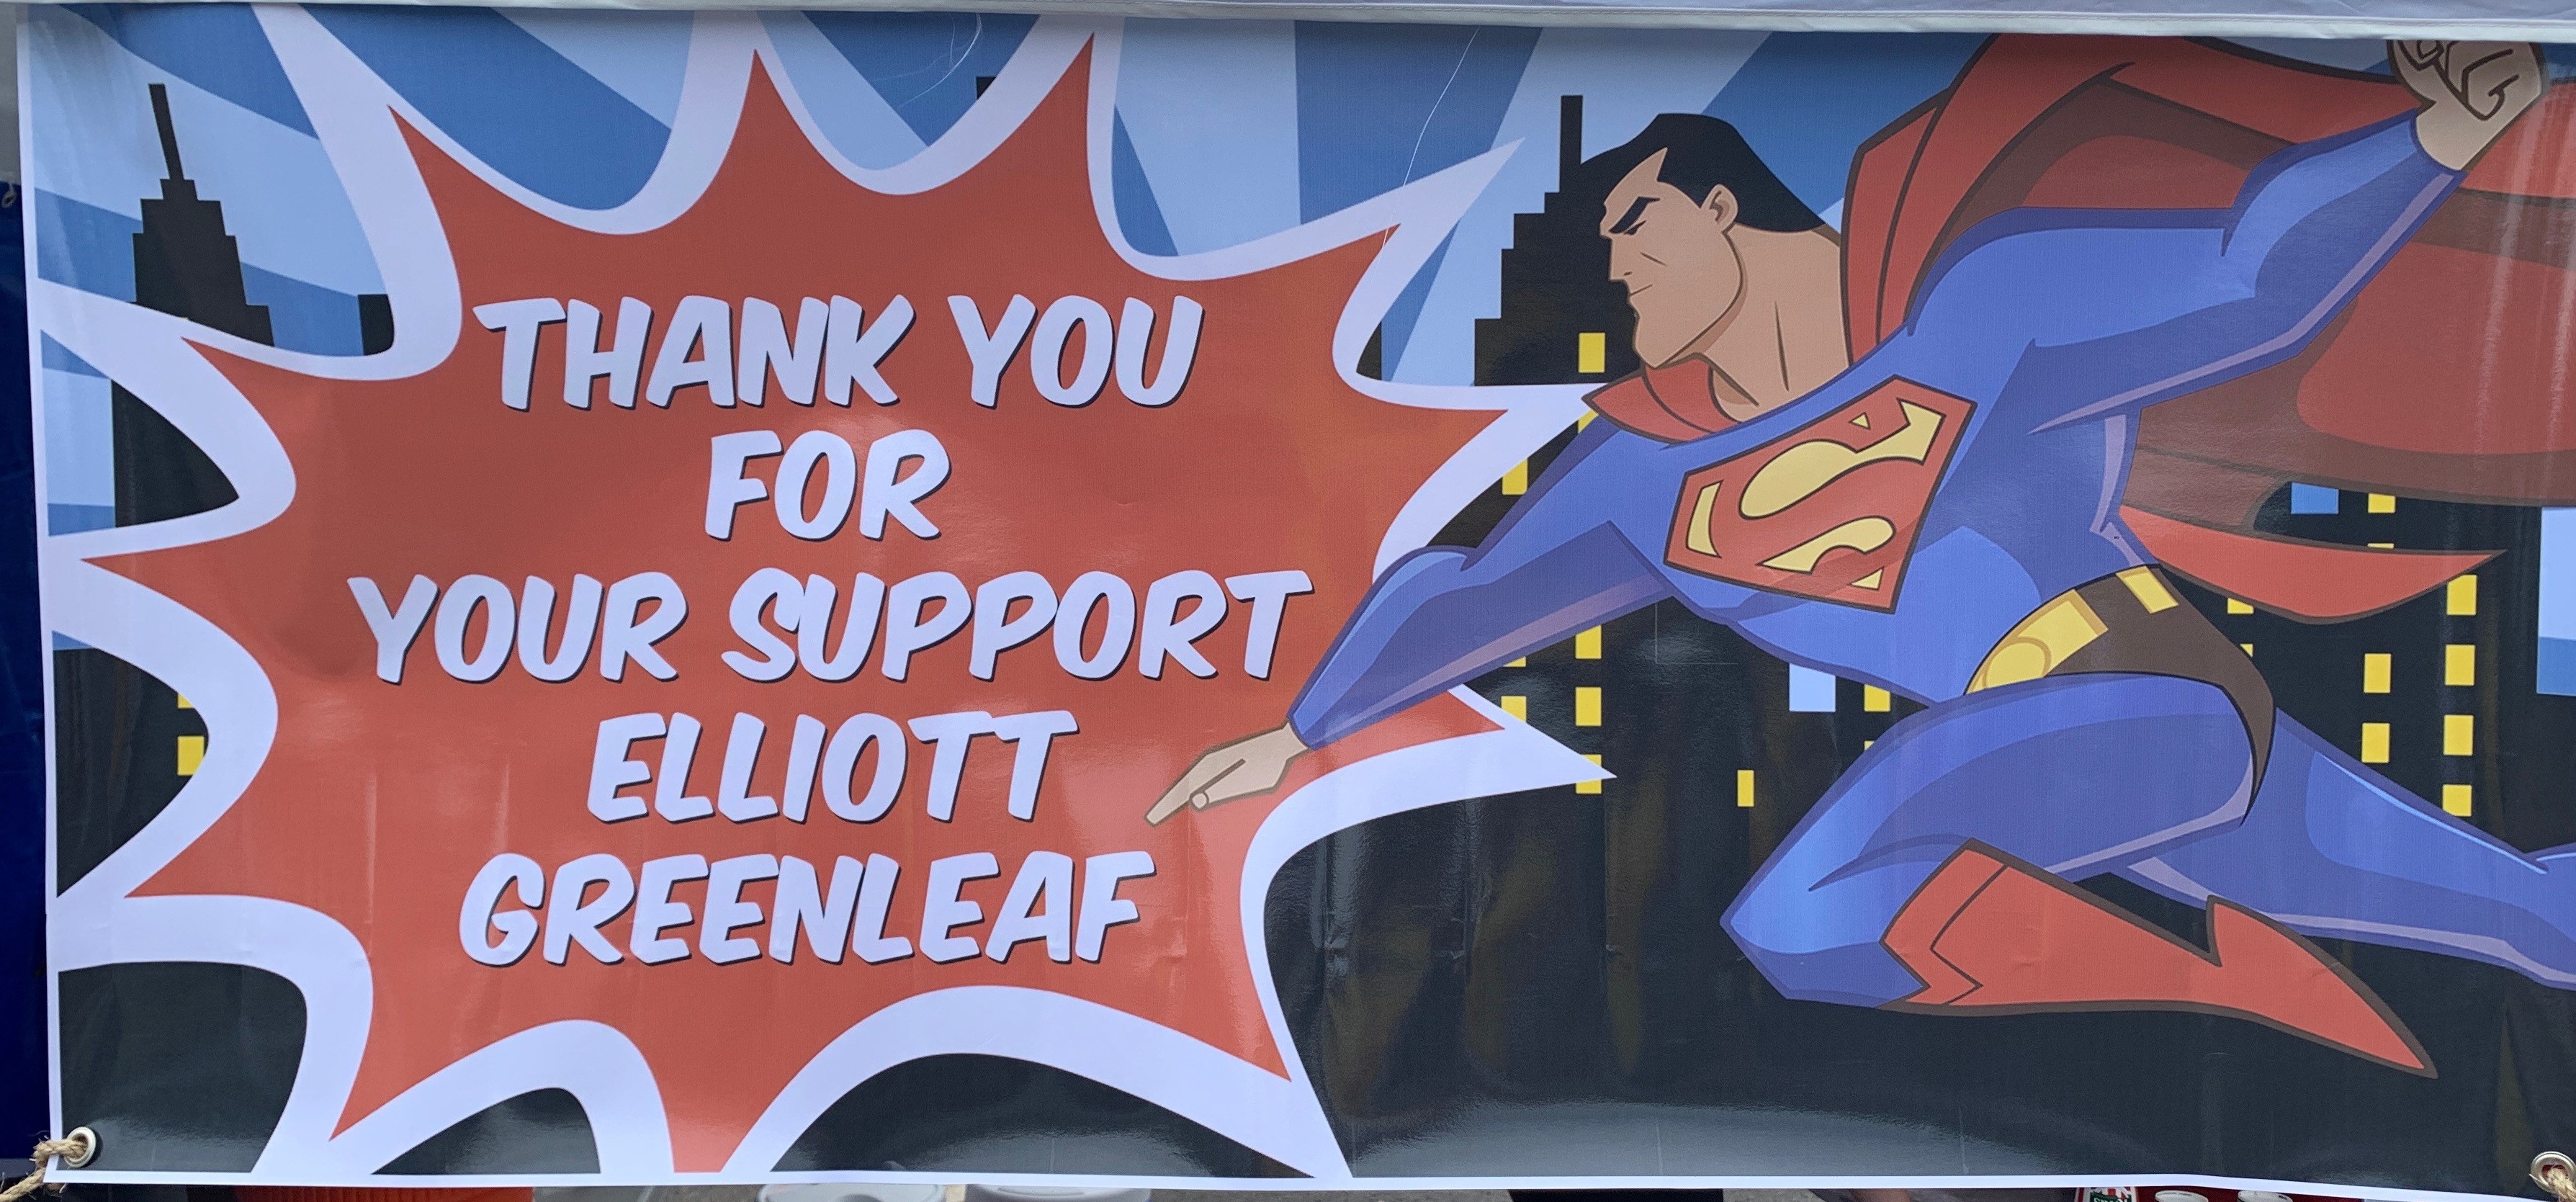 Elliott Greenleaf is Superman Title Sponsor of the Annual John Shapiro Superheroes 5k for 10th Consecutive Year